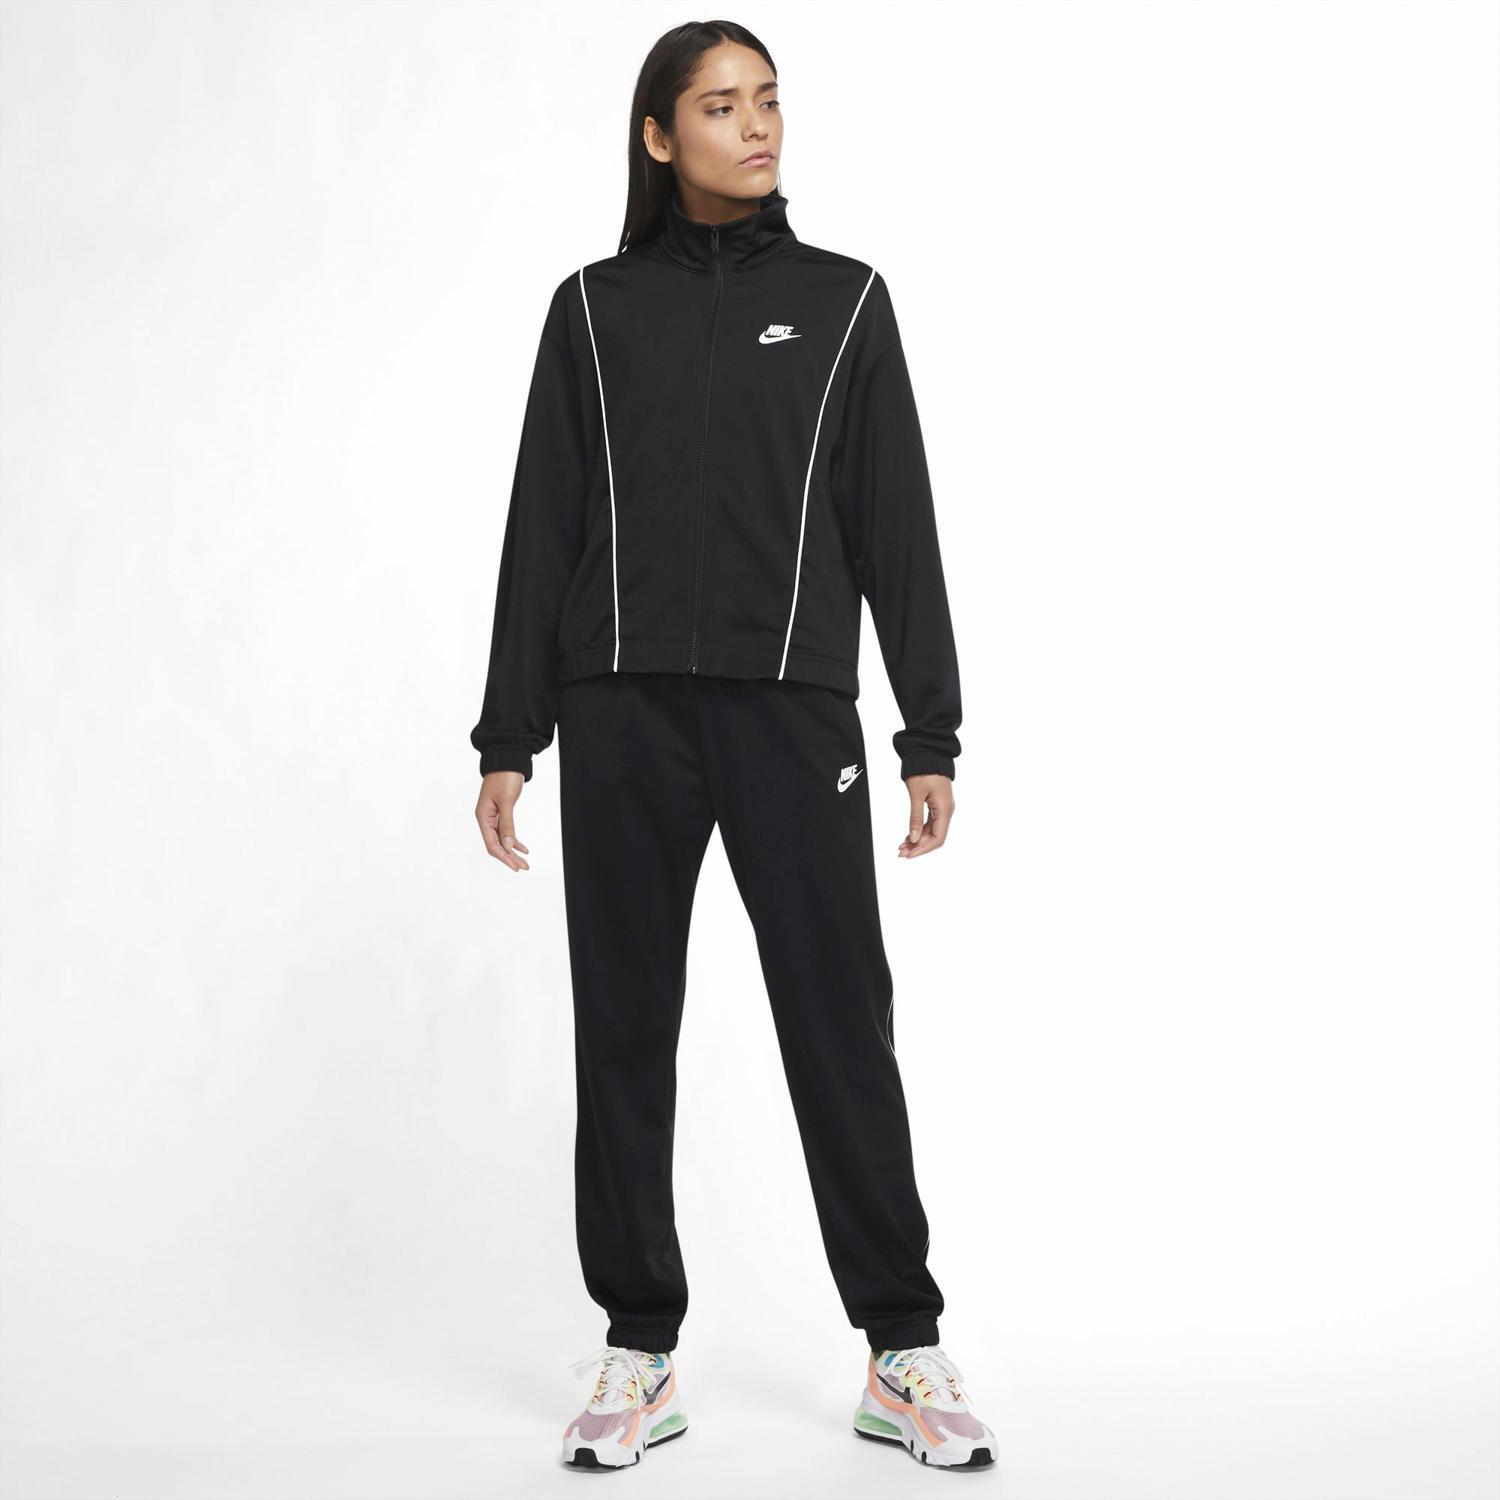 Chándals · Nike · Mujer · Deportes · El Corte Inglés (4)